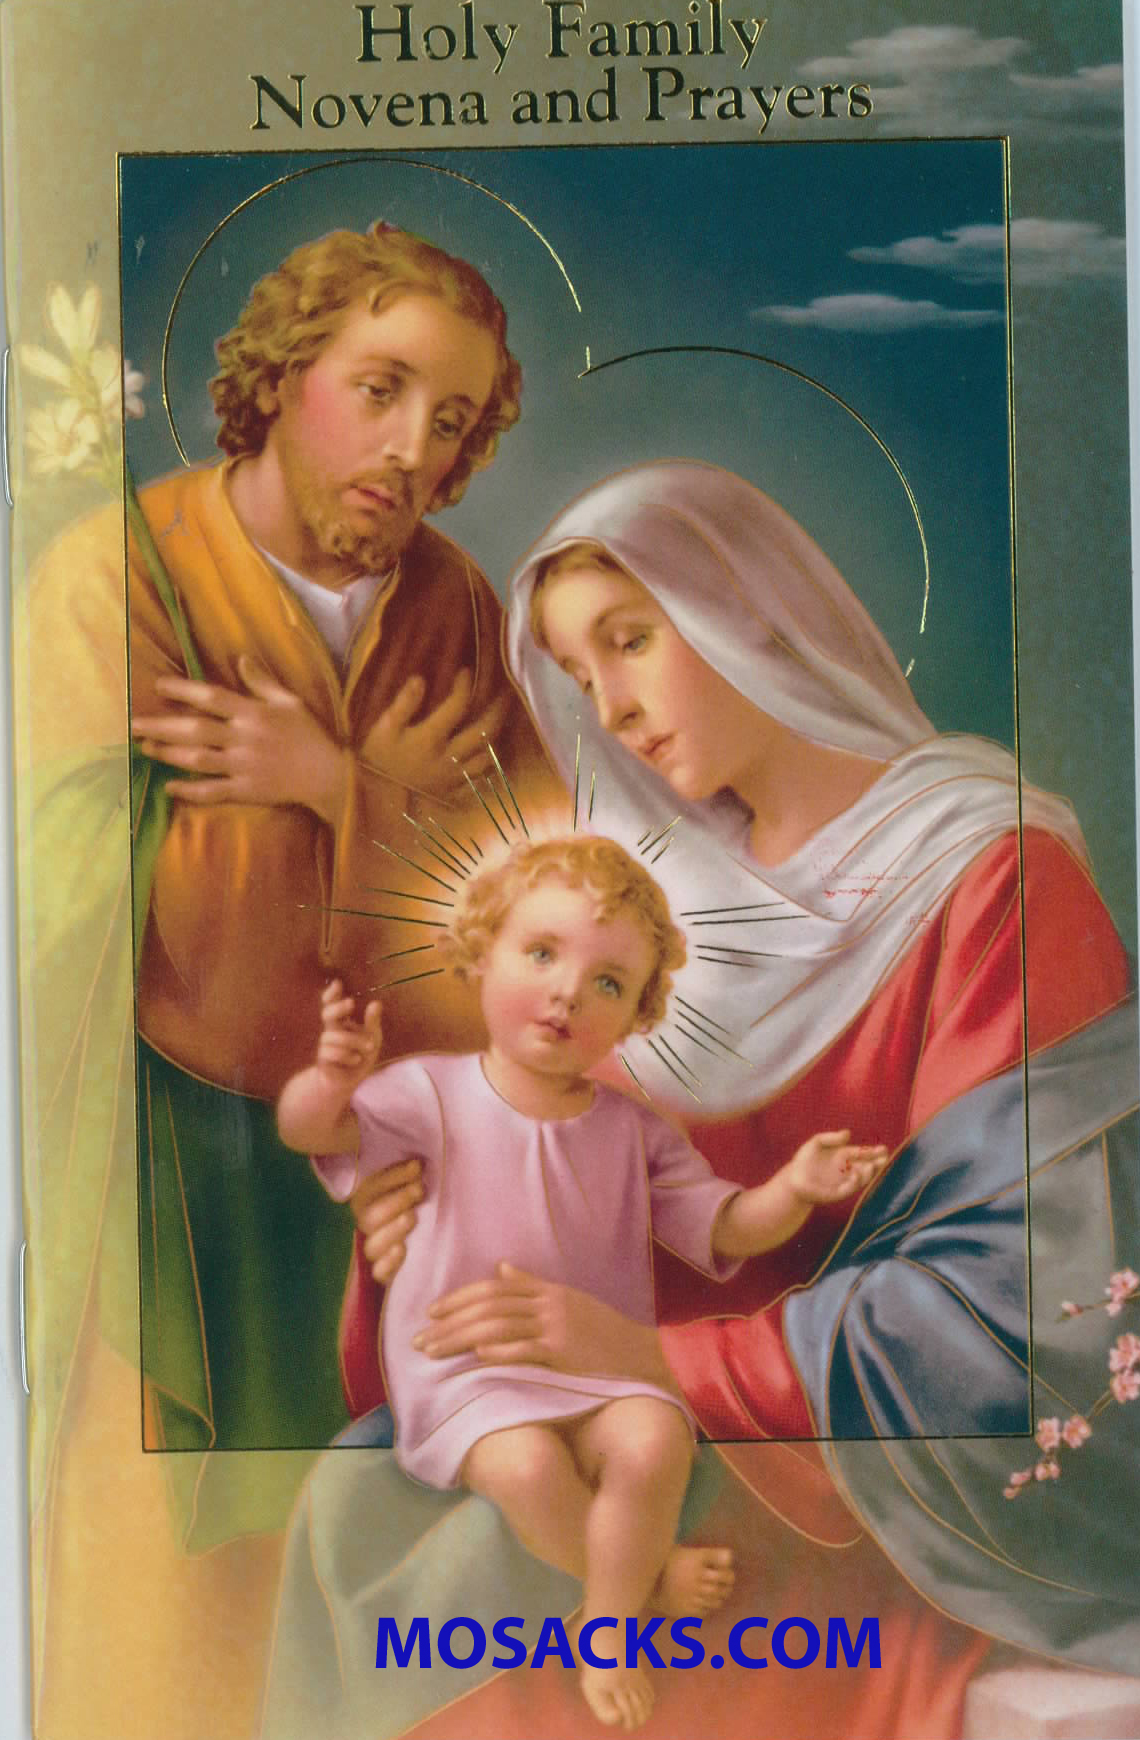 Holy Family Novena and Prayers Prayer Book by Daniel A. Lord, S.J. 12-2432-365